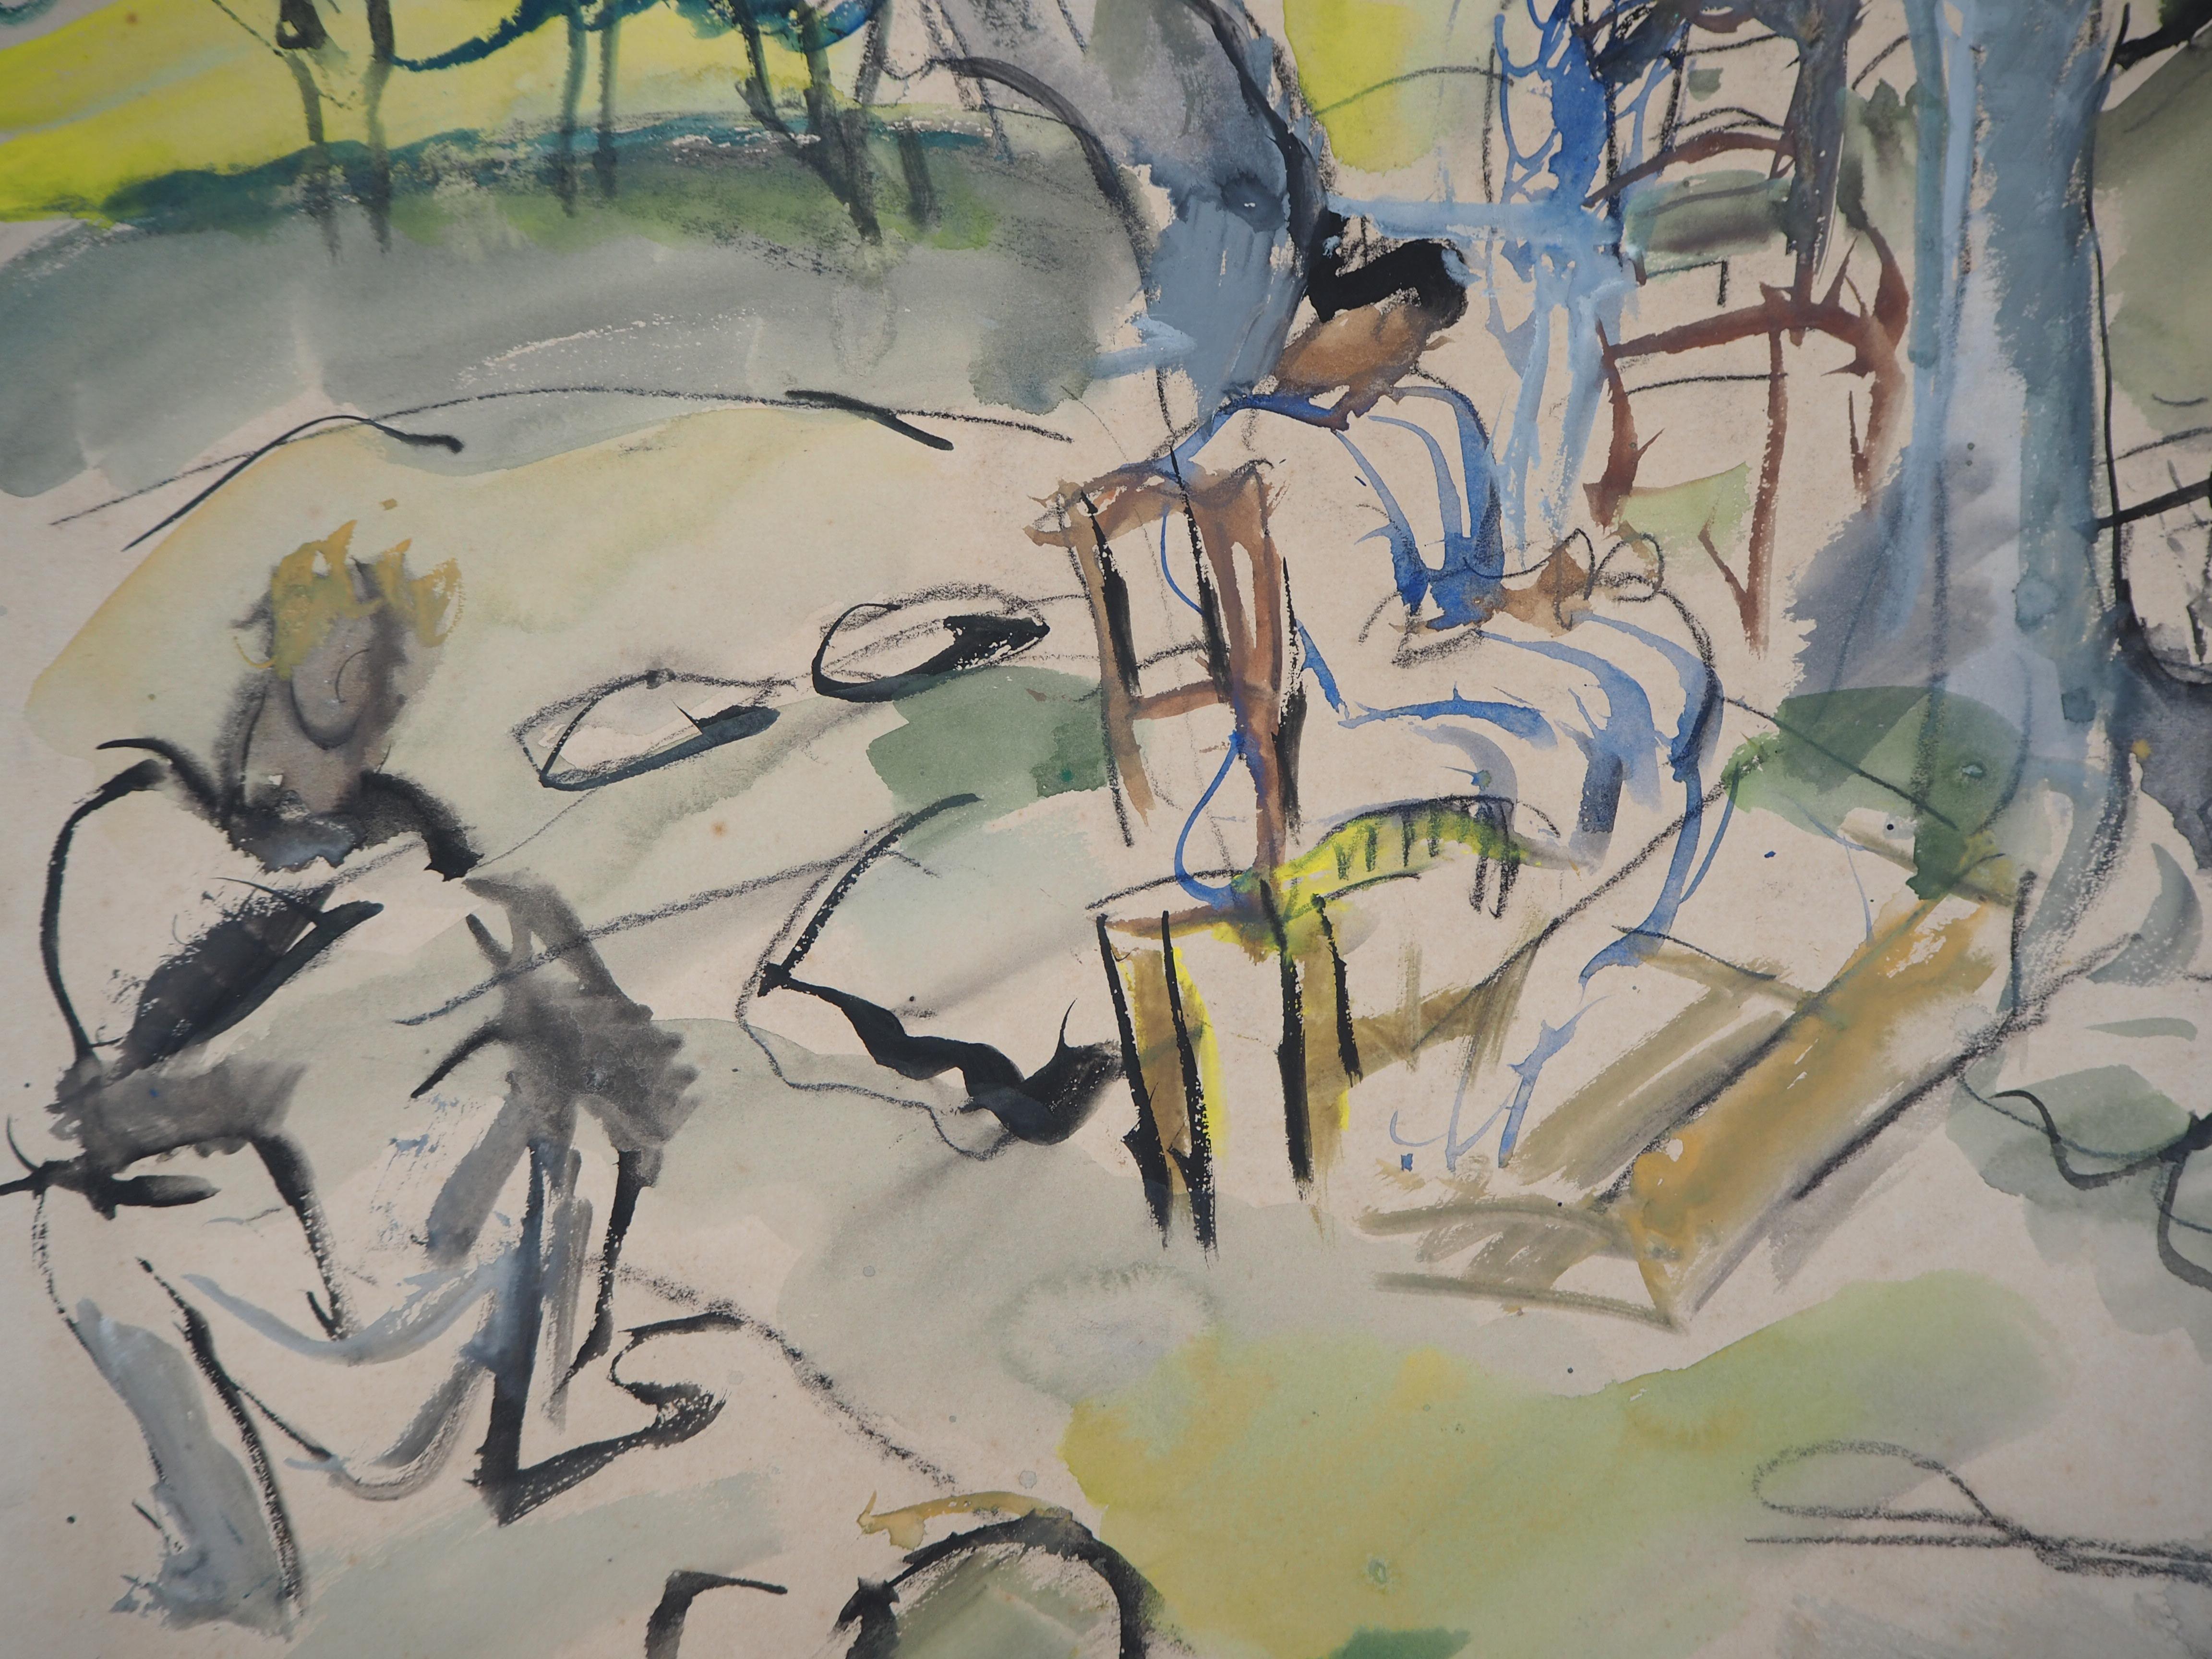 Provence : A Rest under the Trees - Original handsigned gouache & watercolor - Modern Art by GEN PAUL